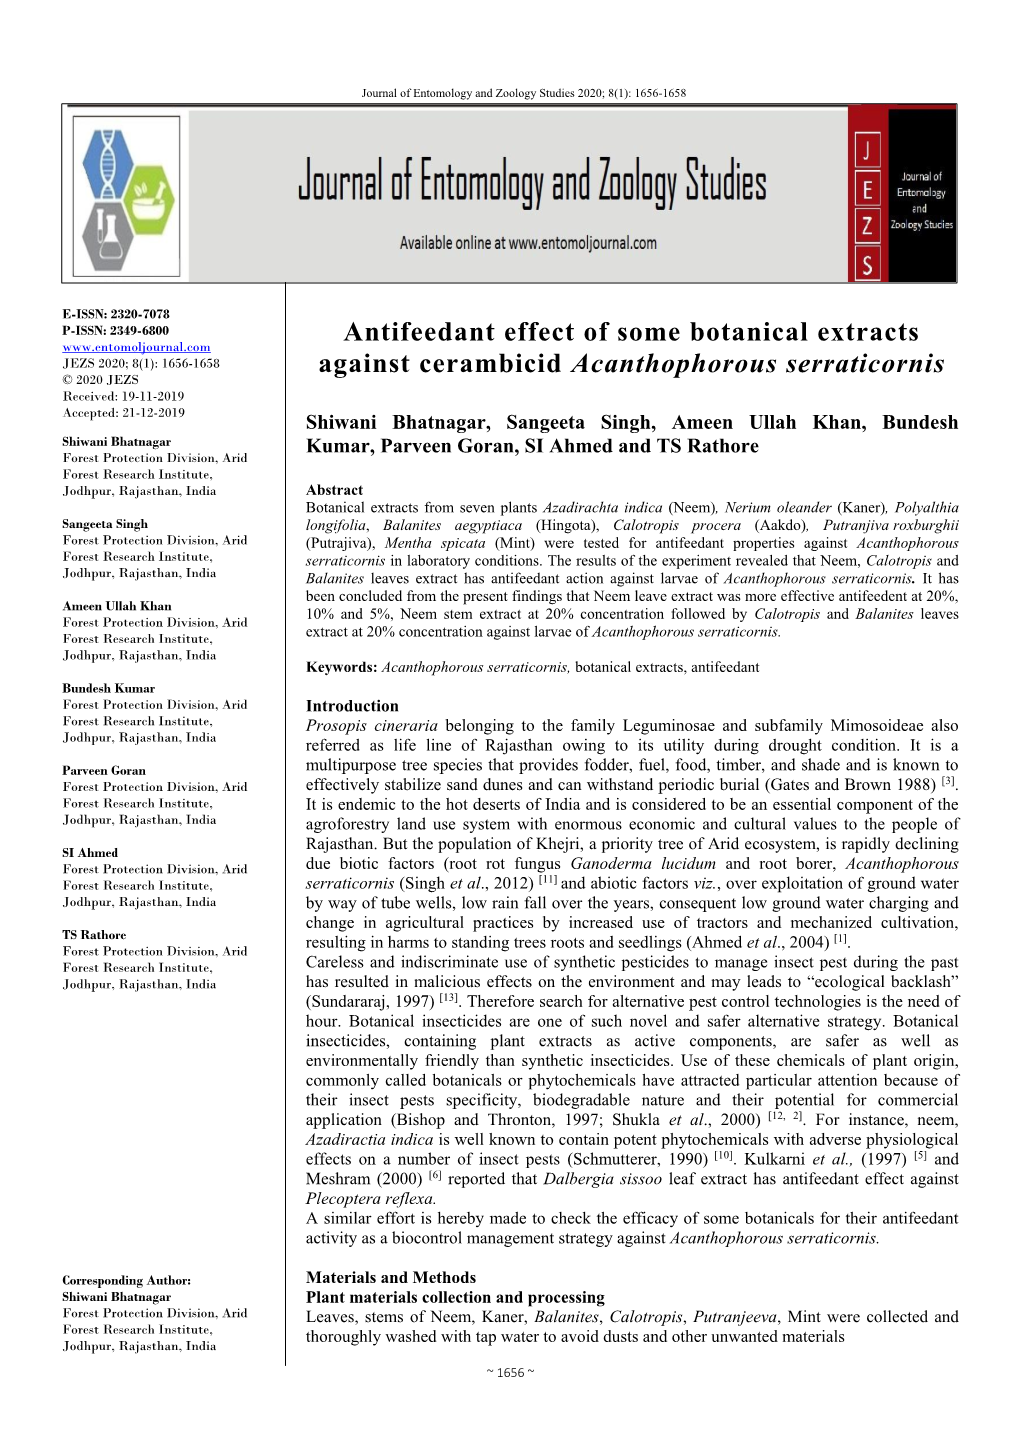 Antifeedant Effect of Some Botanical Extracts Against Cerambicid